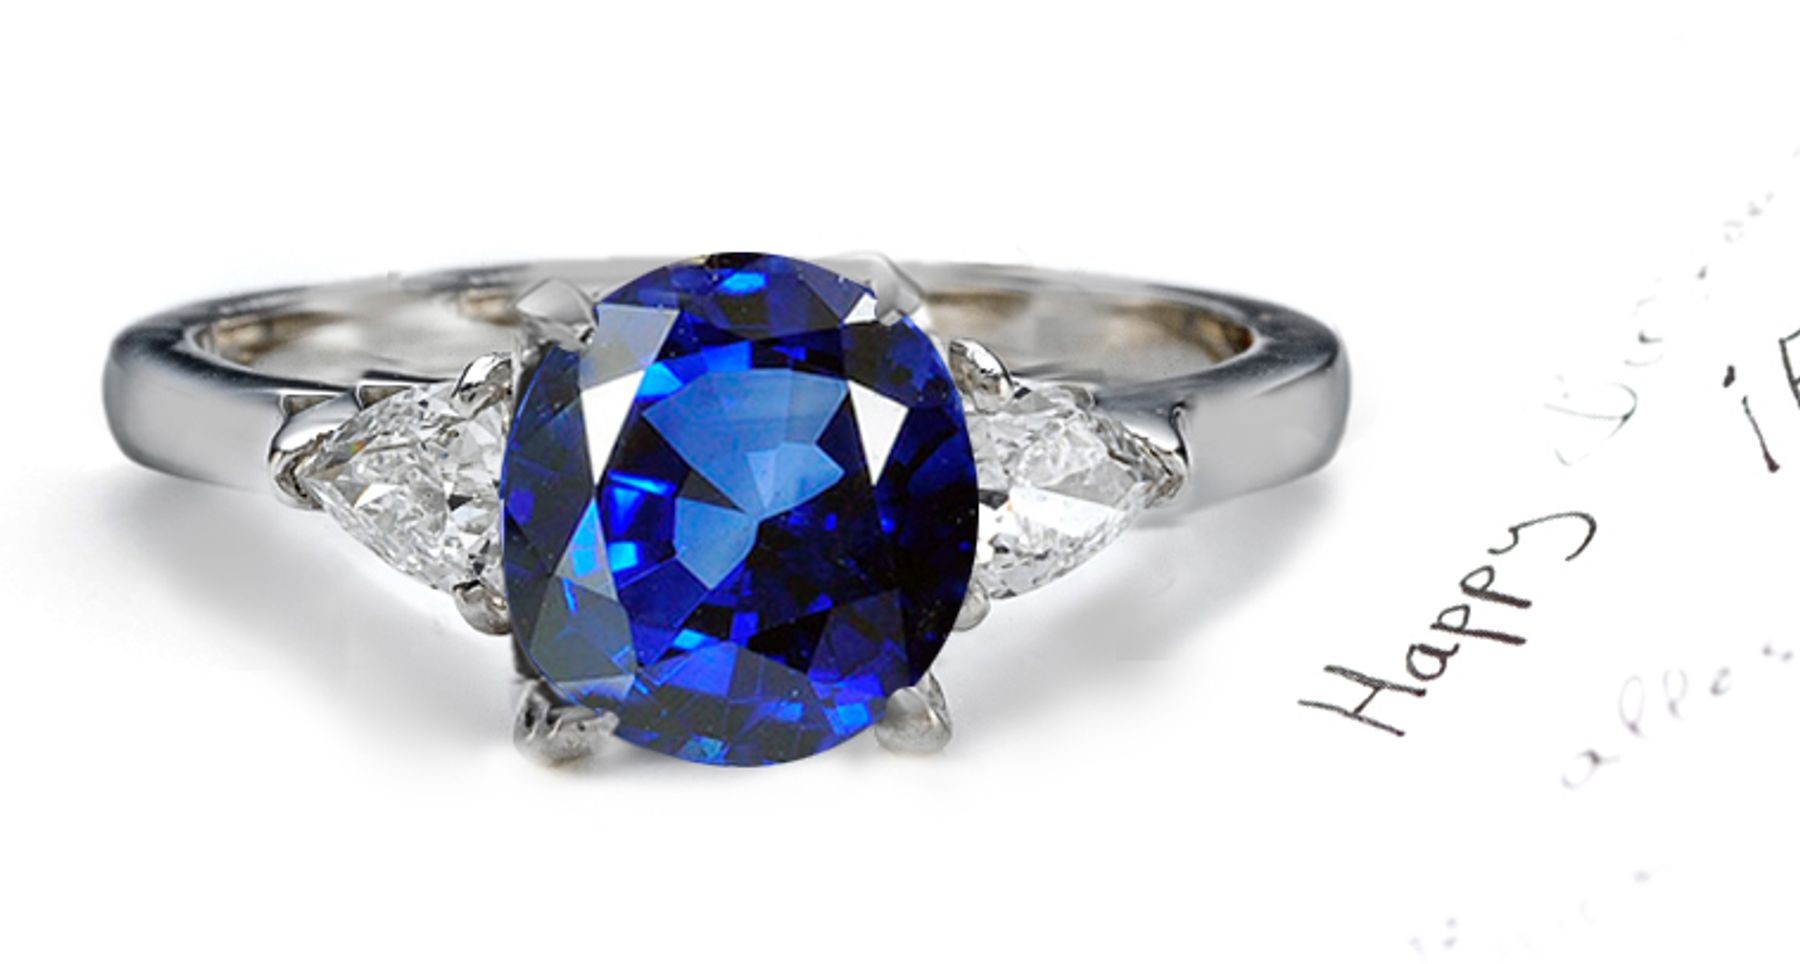 Harmony: A Simply Amazing Round Blue Sapphire & Pears Diamond Ring.